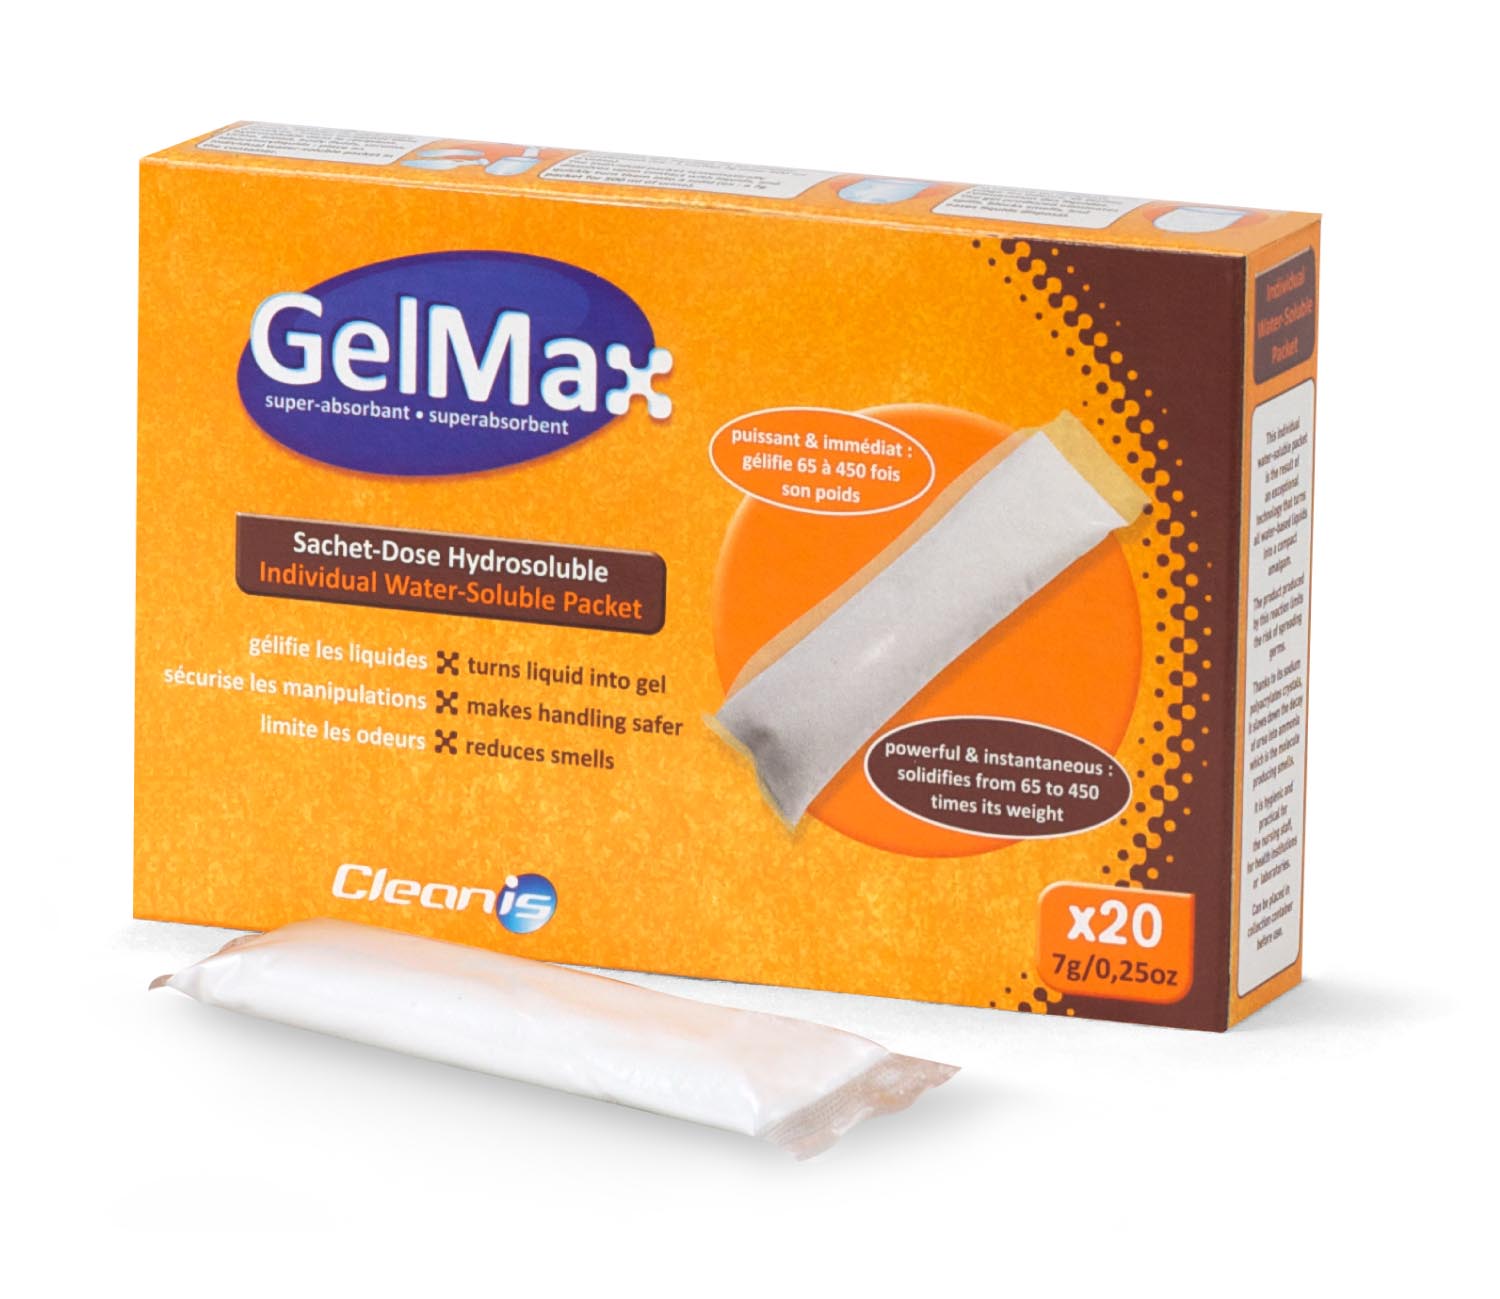 gelmax-super-absorbent-sachets_33527.jpg